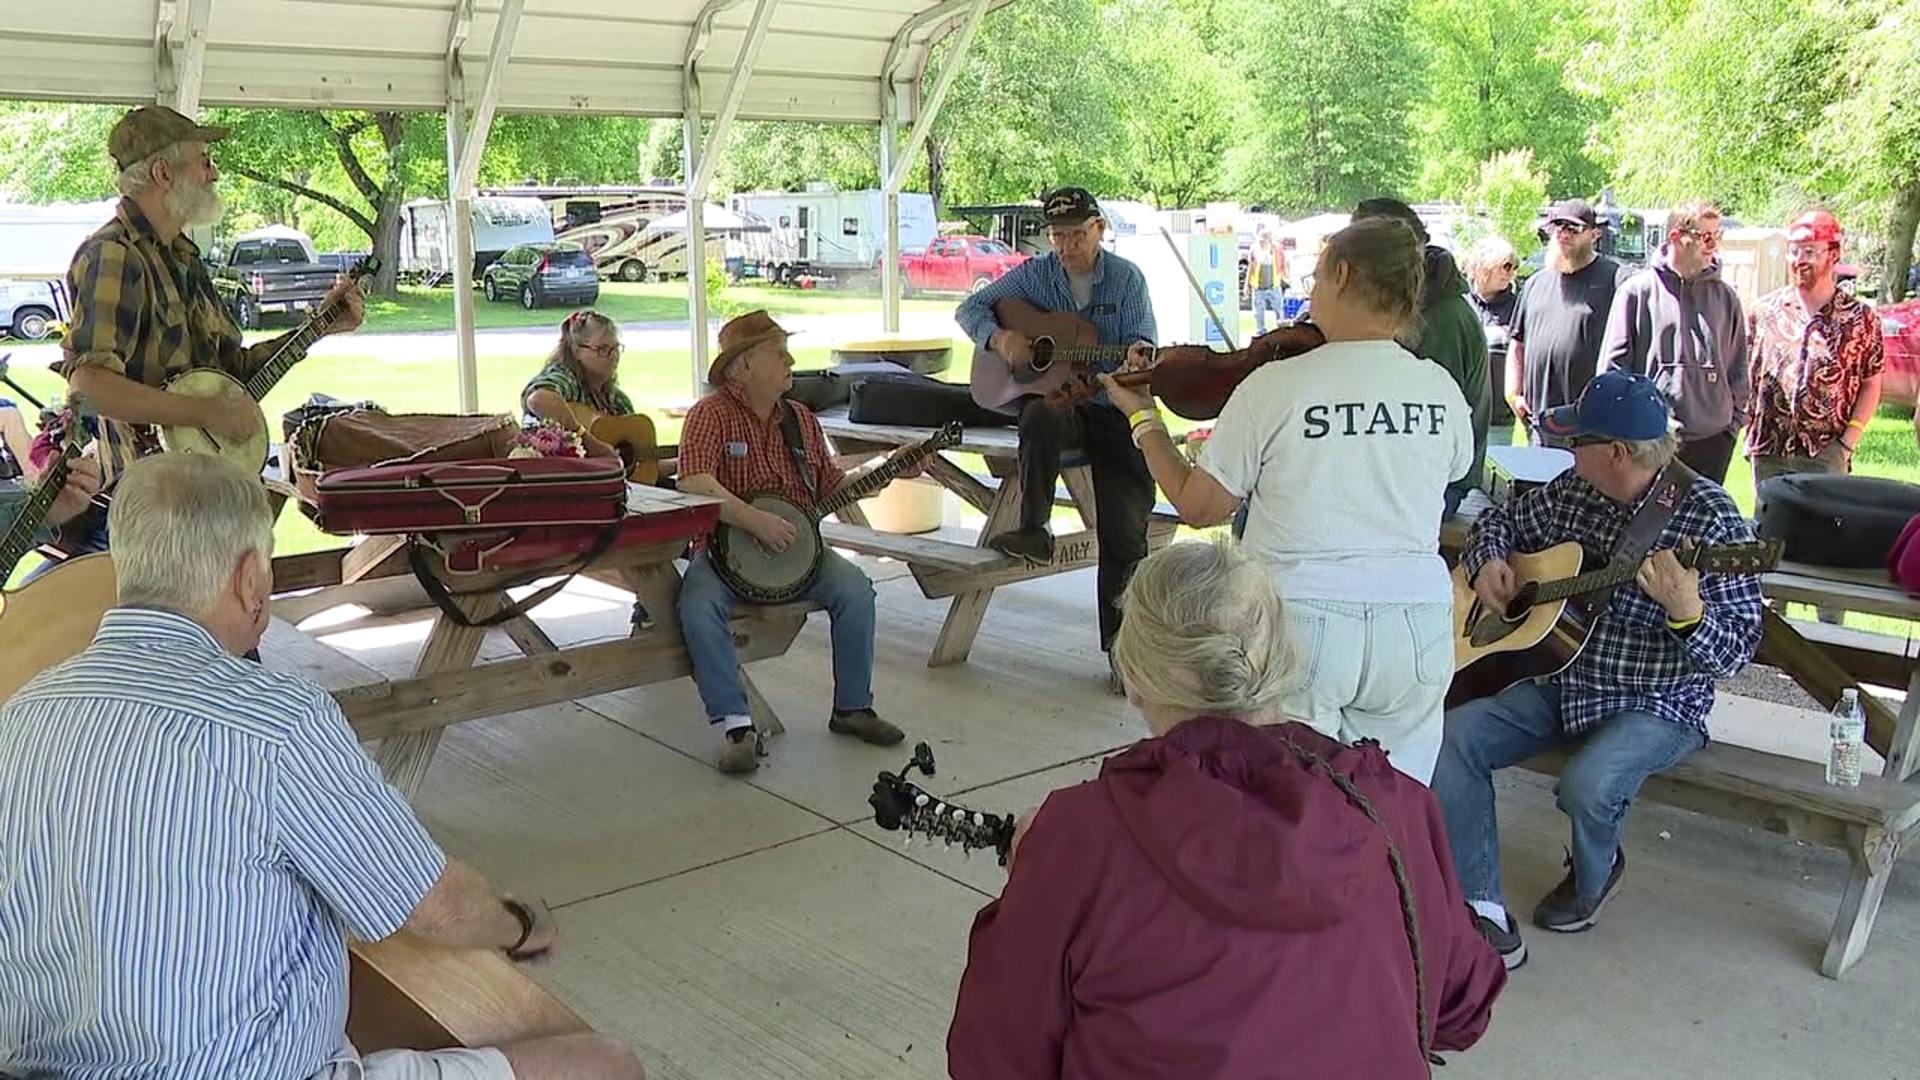 The NEPA Bluegrass Festival runs through Sunday in Tunkhannock Township.